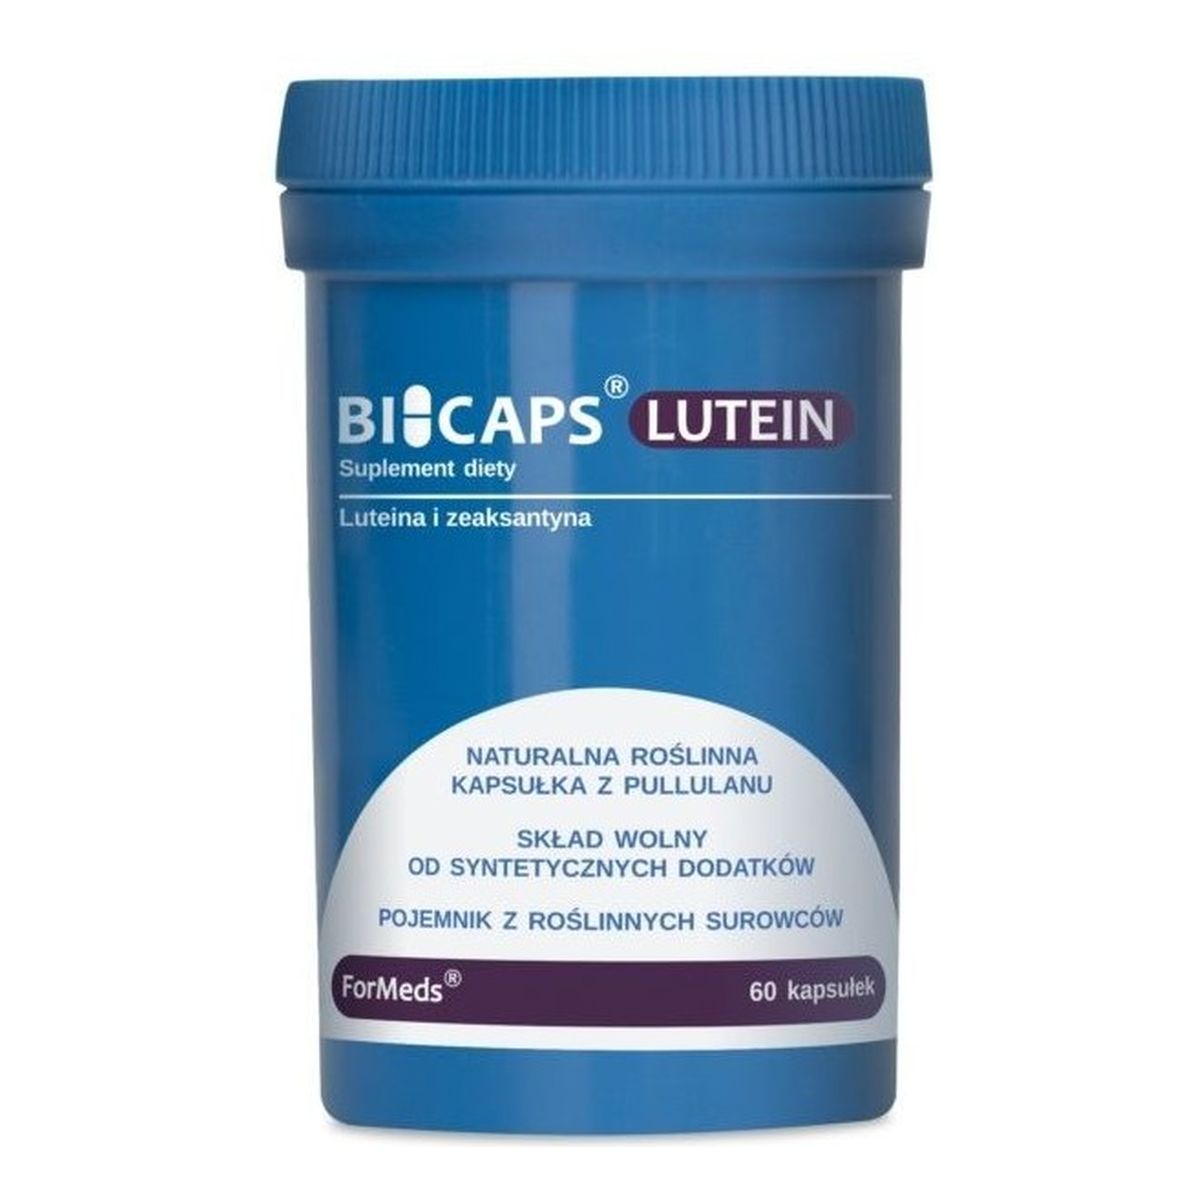 Formeds Bicaps Lutein suplement diety 60 Kapsułek